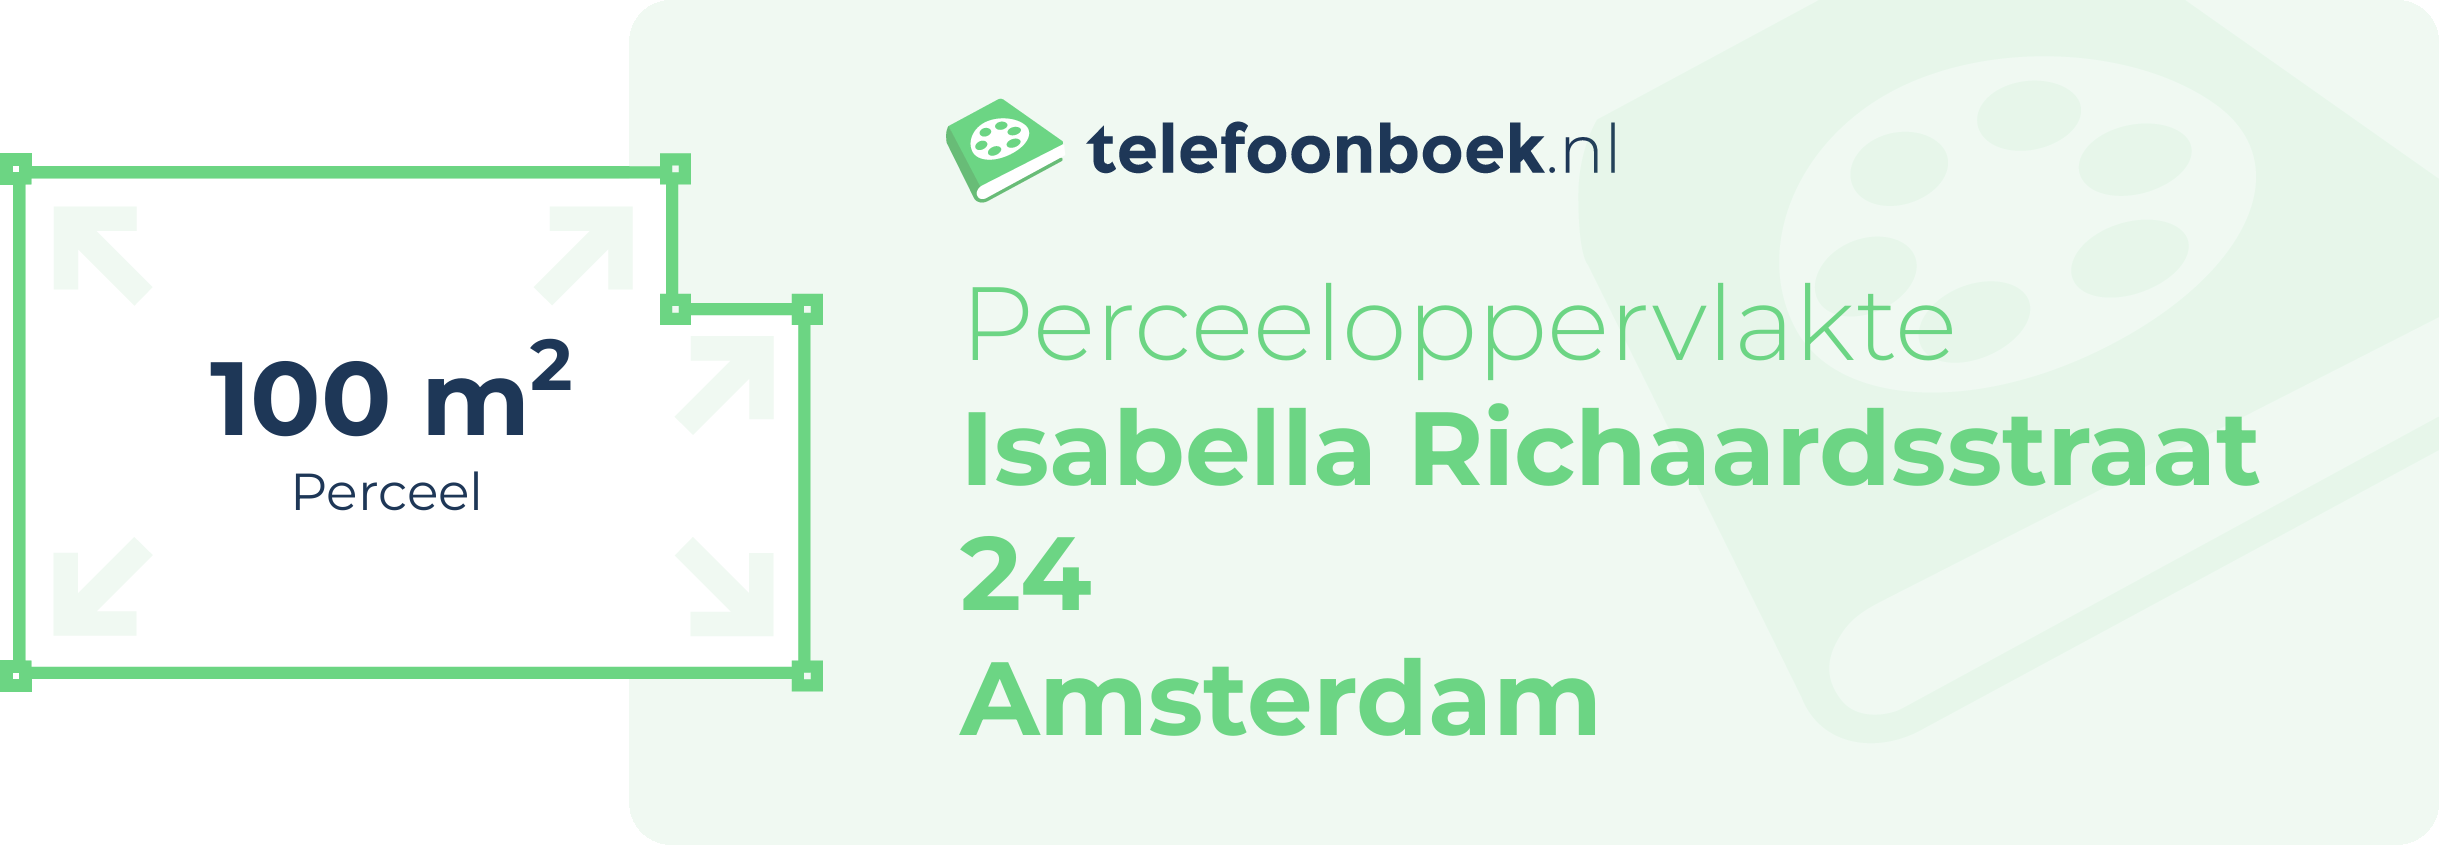 Perceeloppervlakte Isabella Richaardsstraat 24 Amsterdam